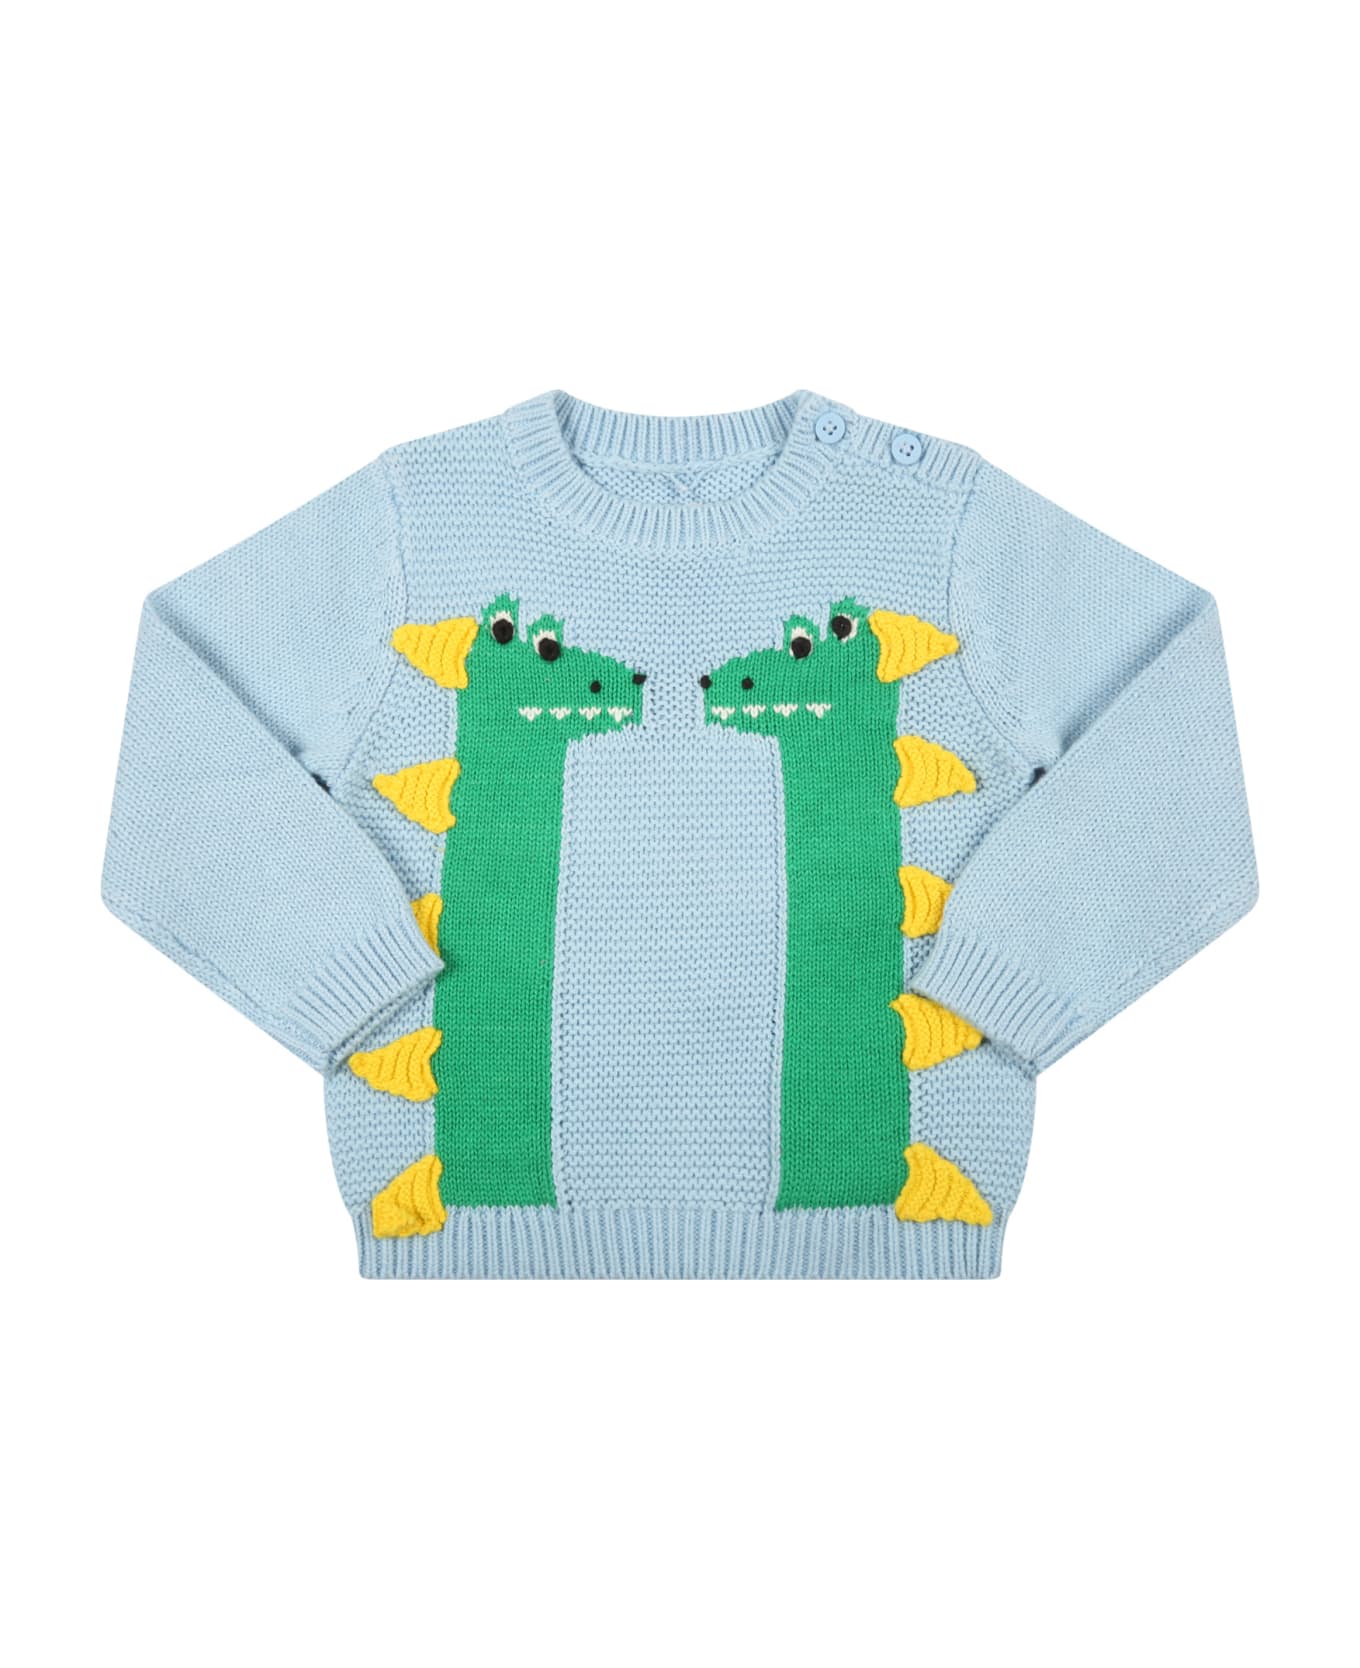 Stella McCartney Kids Light-blue Sweater For Baby Boy With Lamas - Light Blue